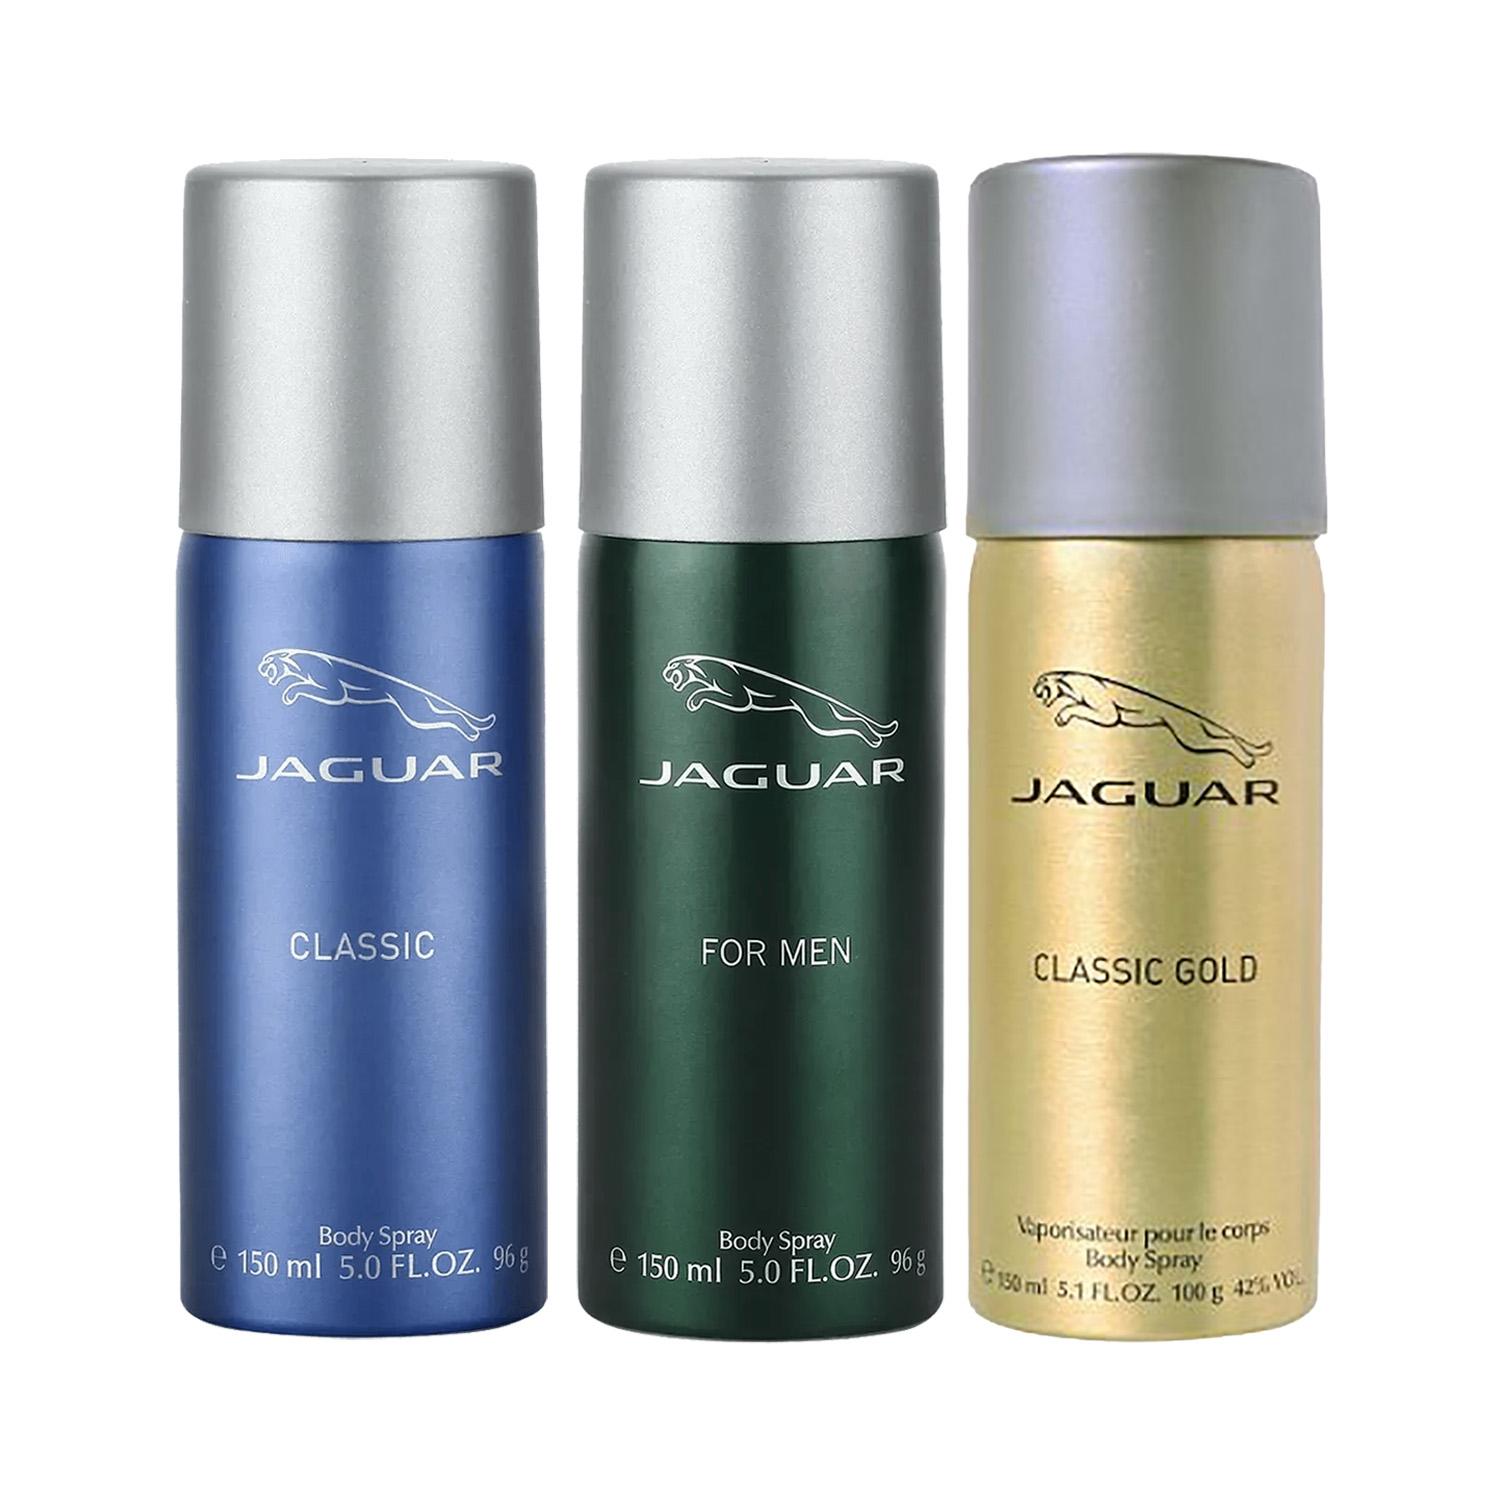 Jaguar | Jaguar Classic + For Men + Classic Gold Deodorant (Pack of 3)